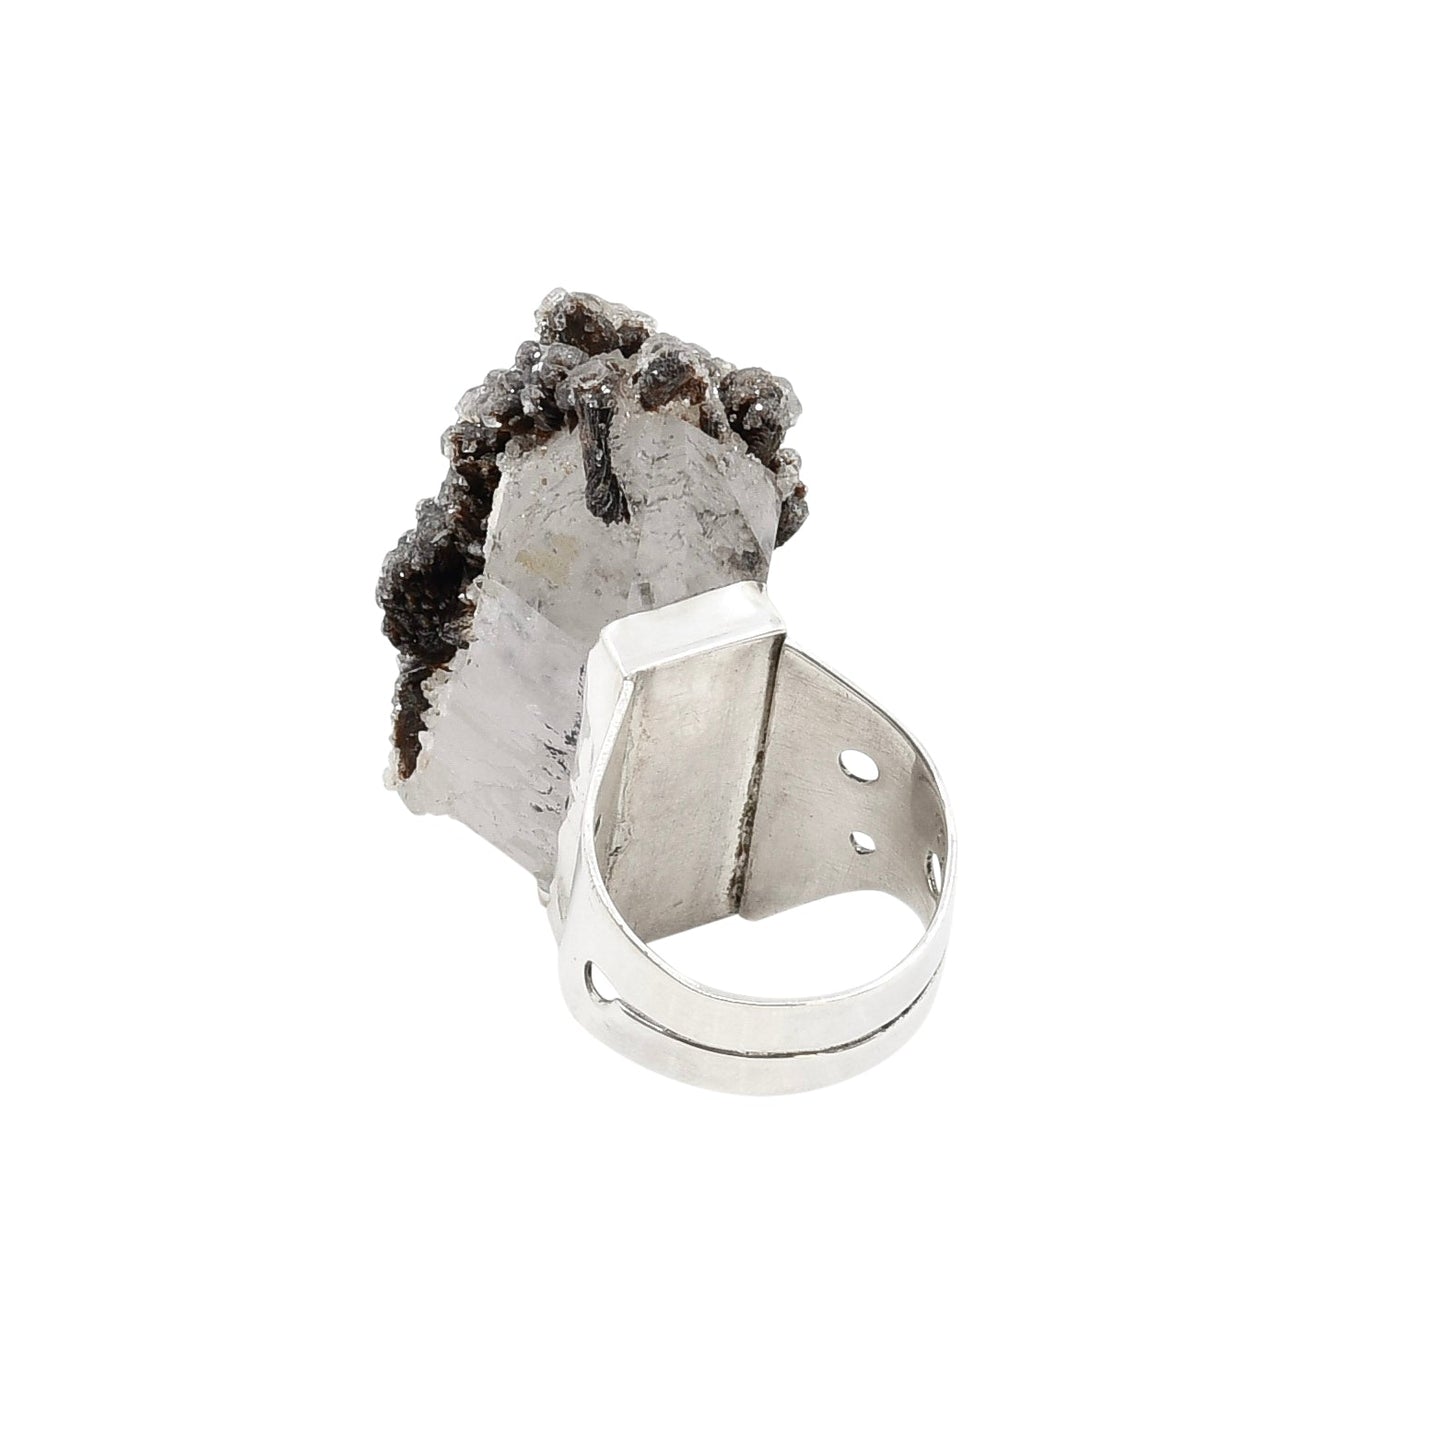 Contemporary Ring by Native Fashion Icon Orlando Dugi - Turquoise & Tufa